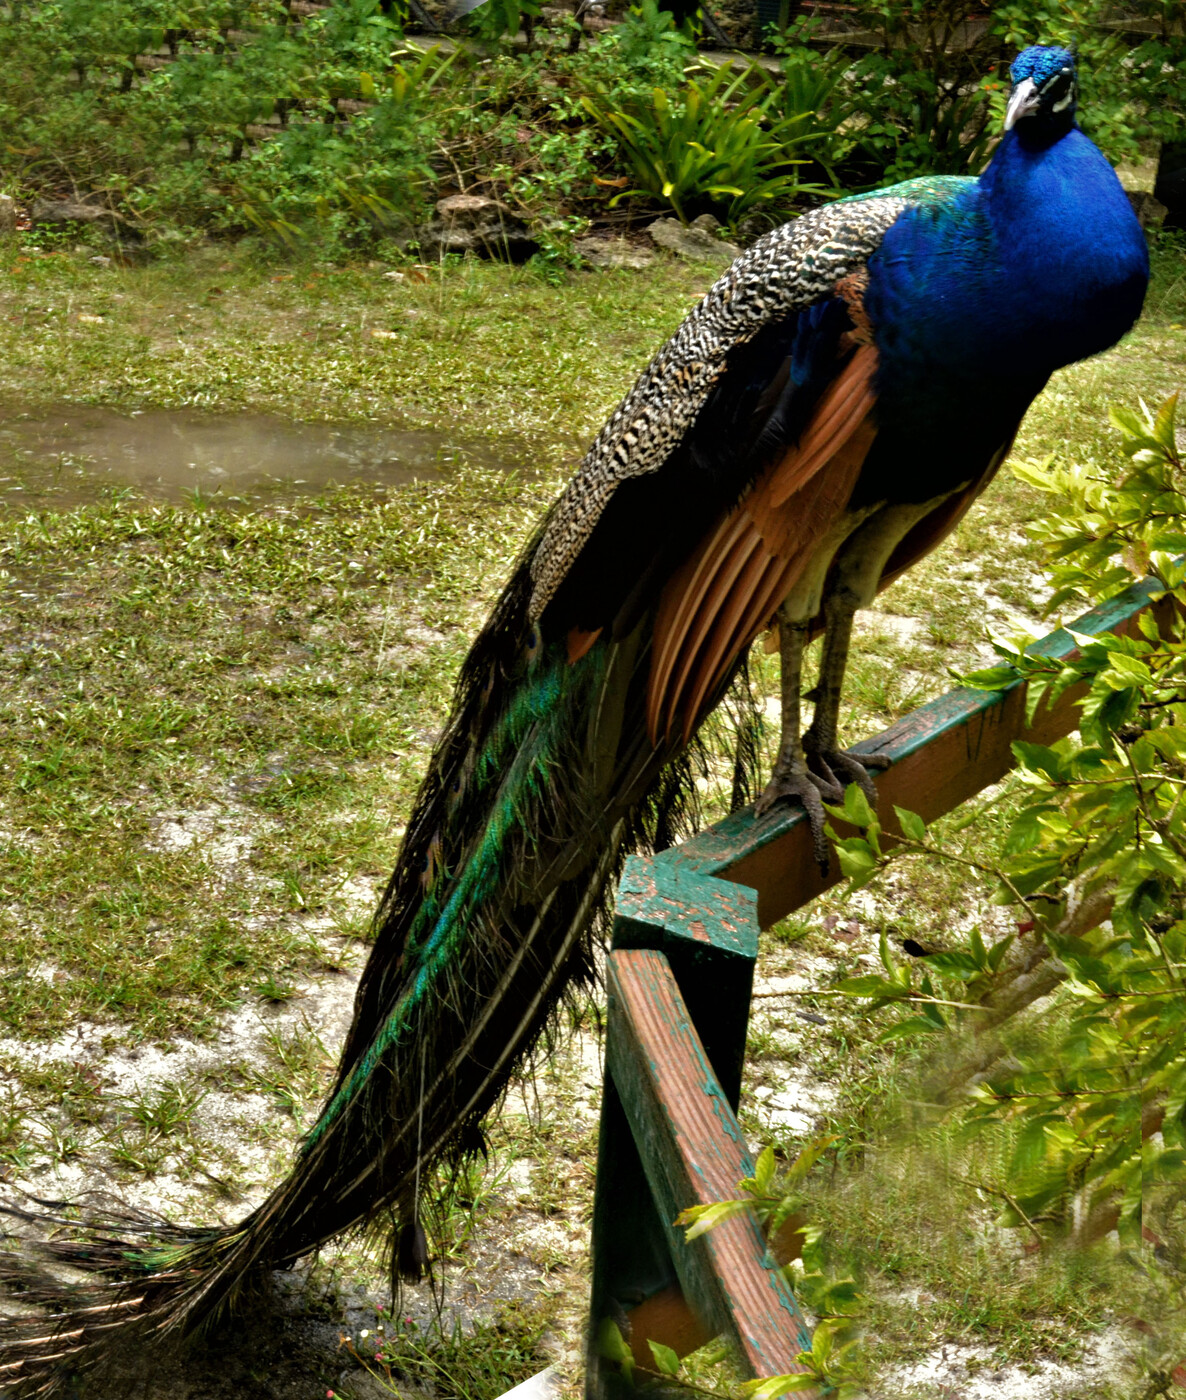 photographer darcyrfd wildlife  photo taken at Nassau, Bahamas